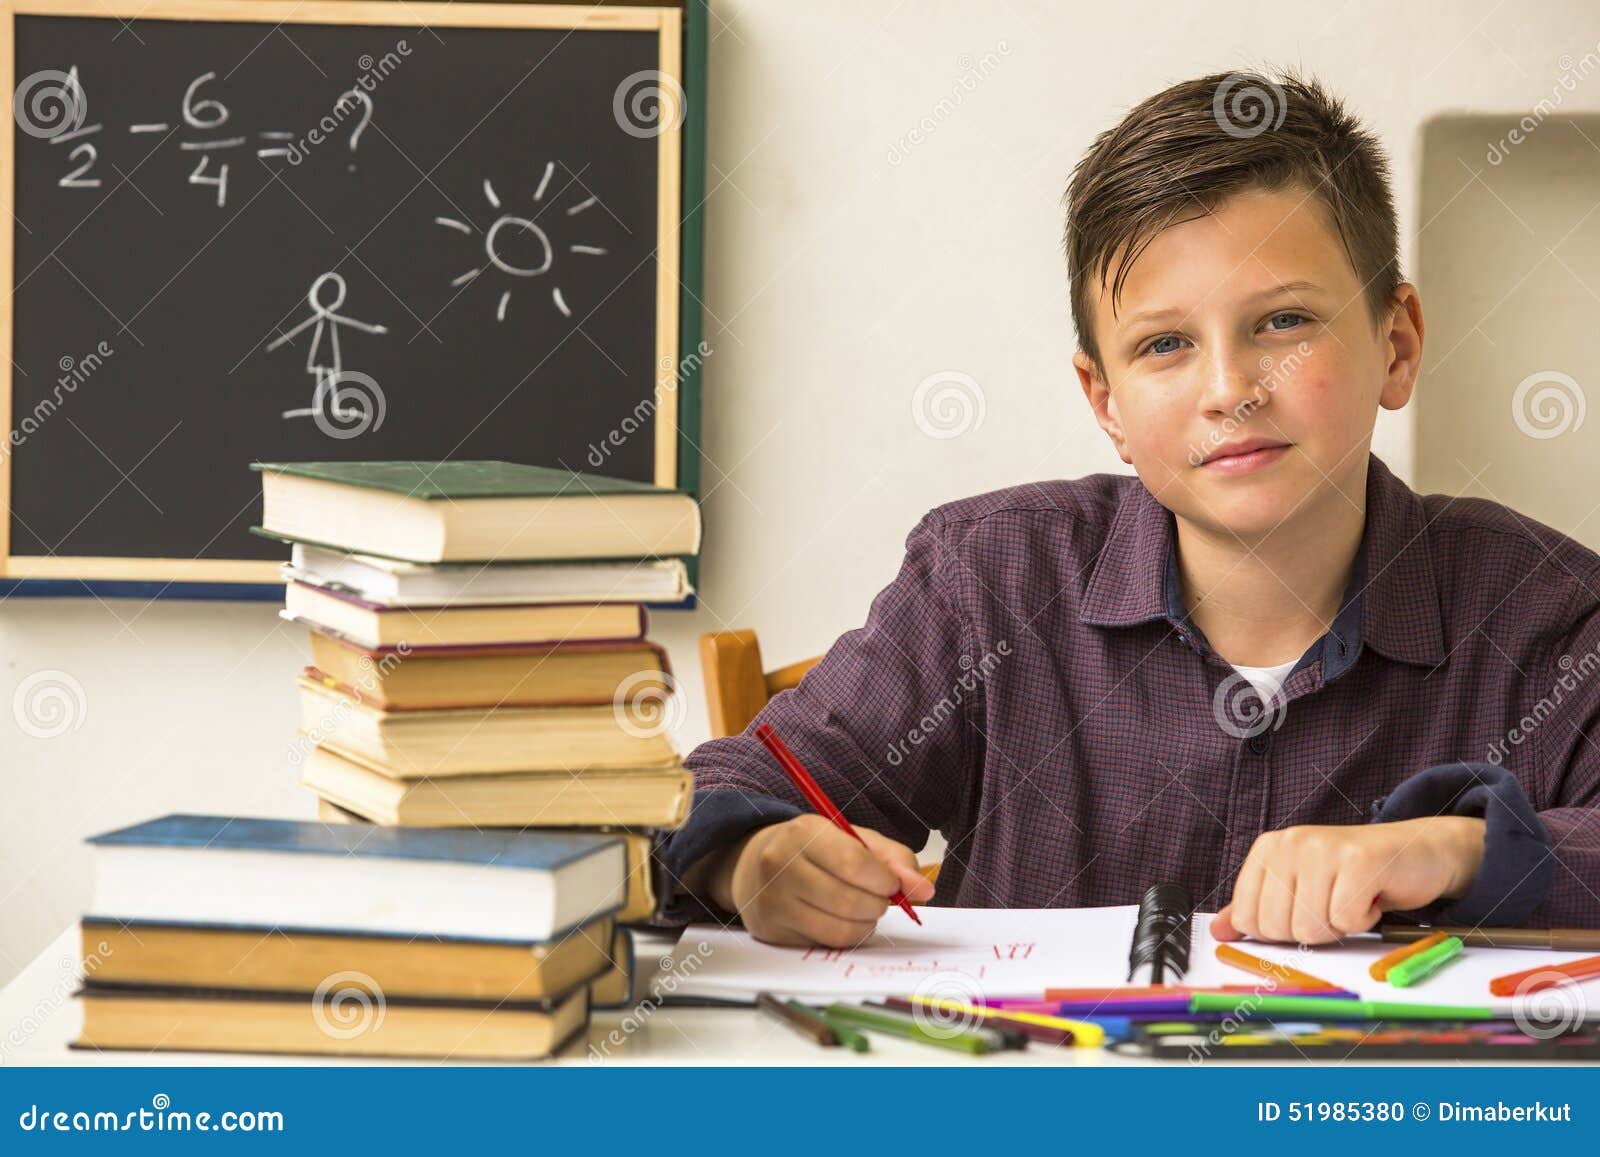 studious schoolboy doing homework. education.